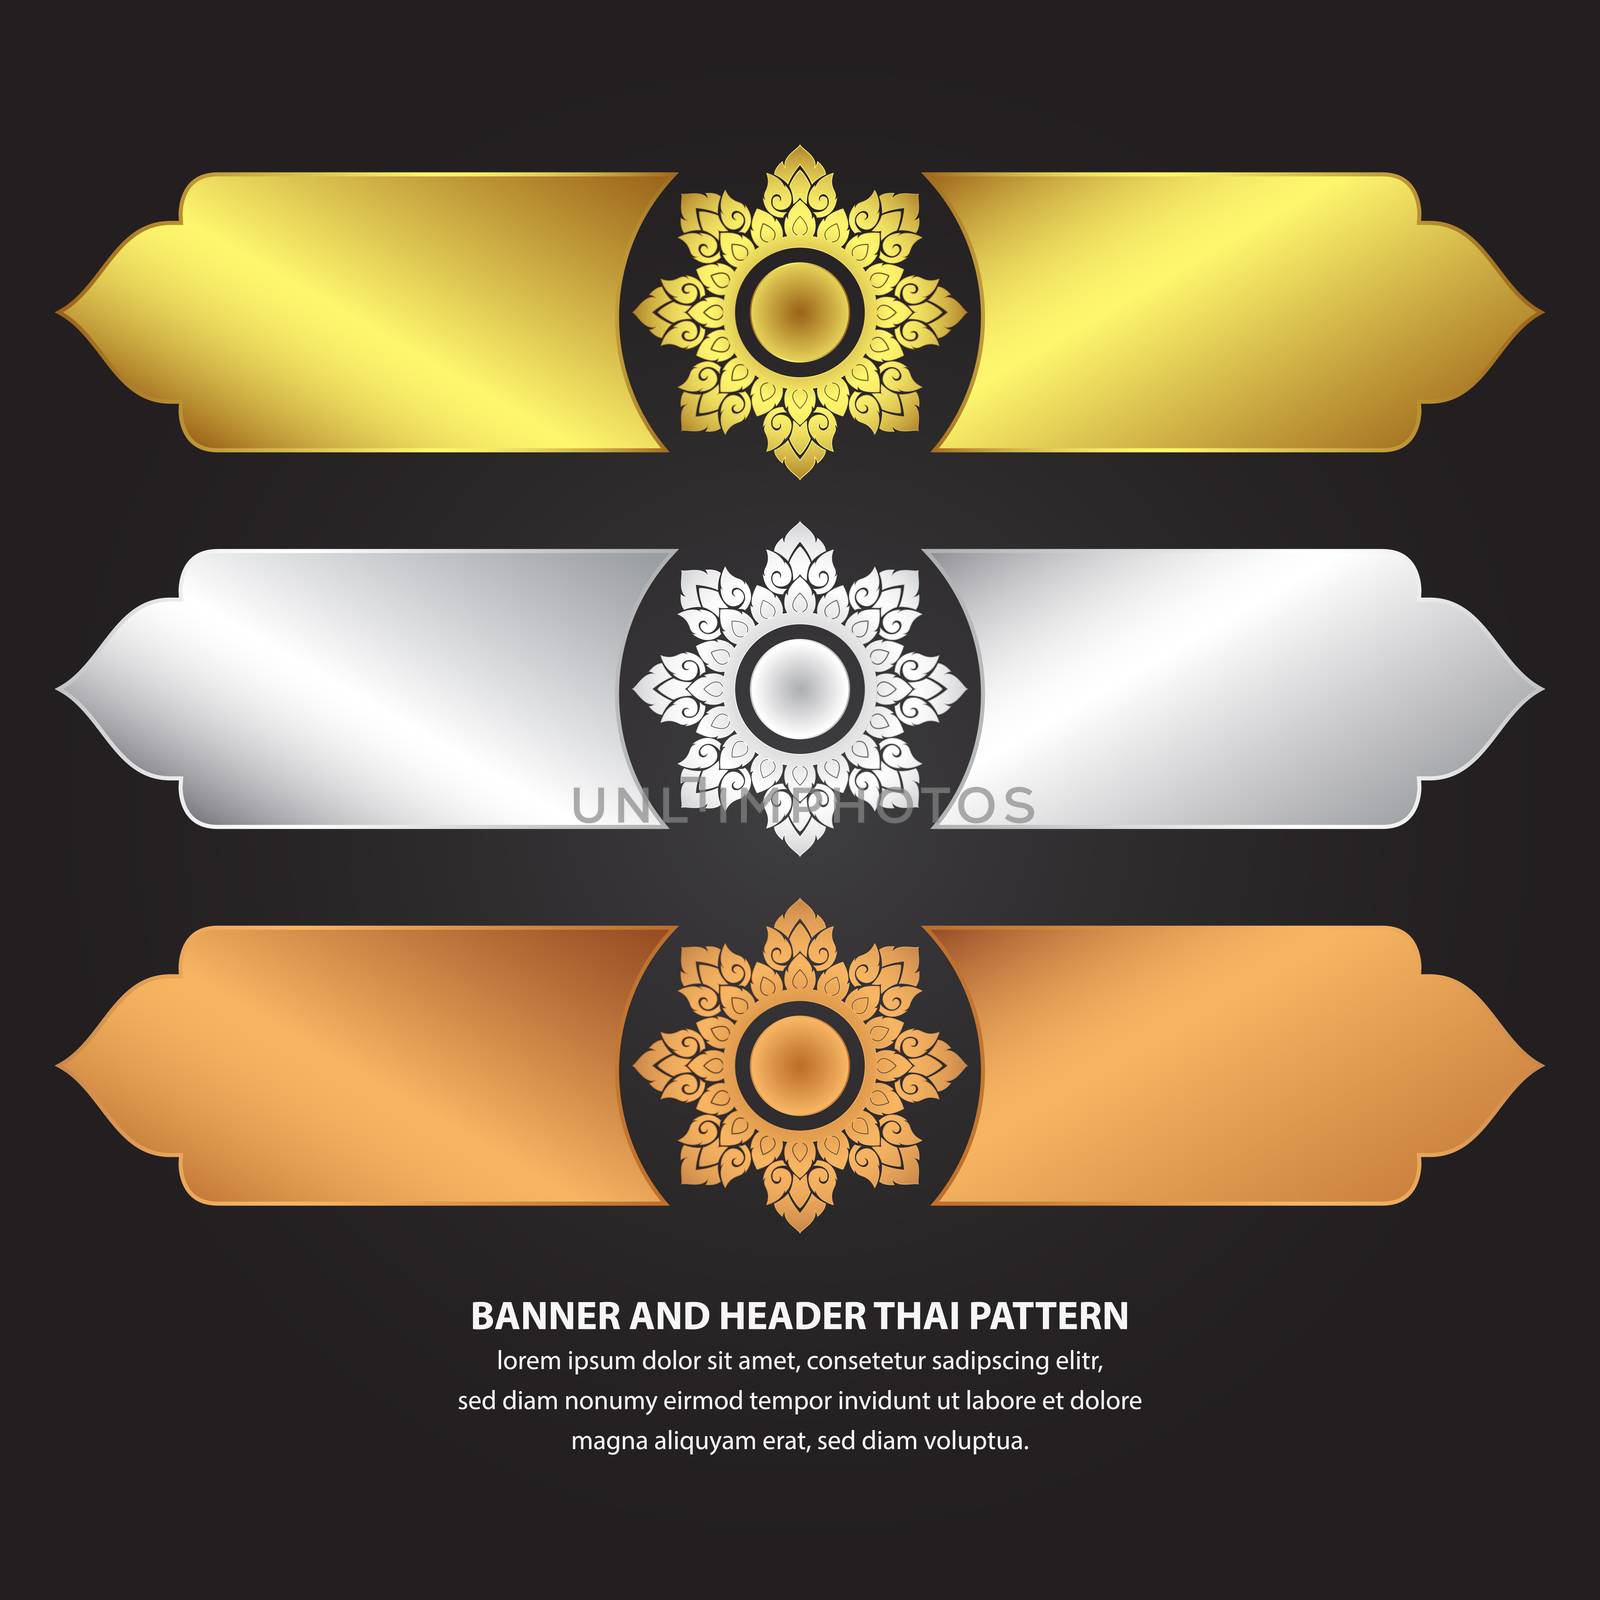 Banner and Header Thai Pattern, Vector illustration.